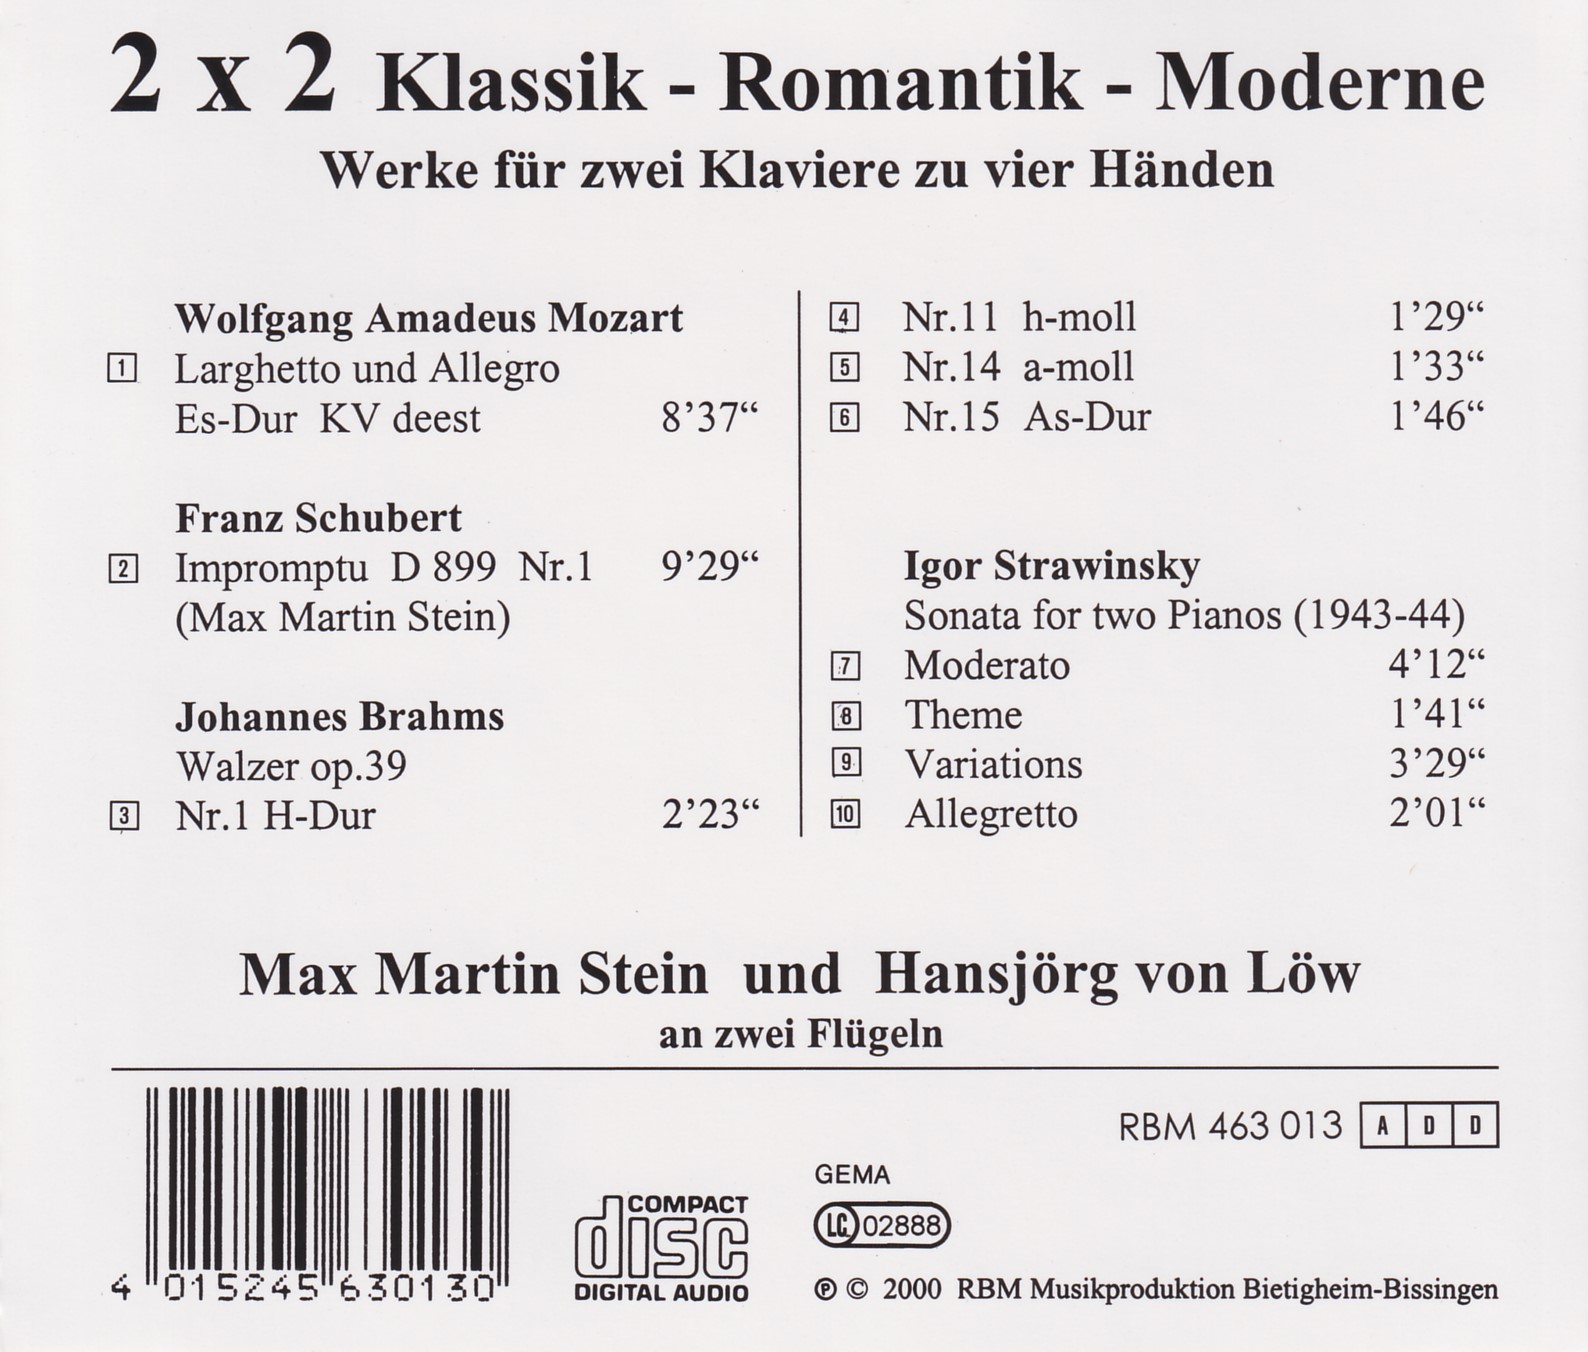 2x2 Klassik - Romantik - Moderne